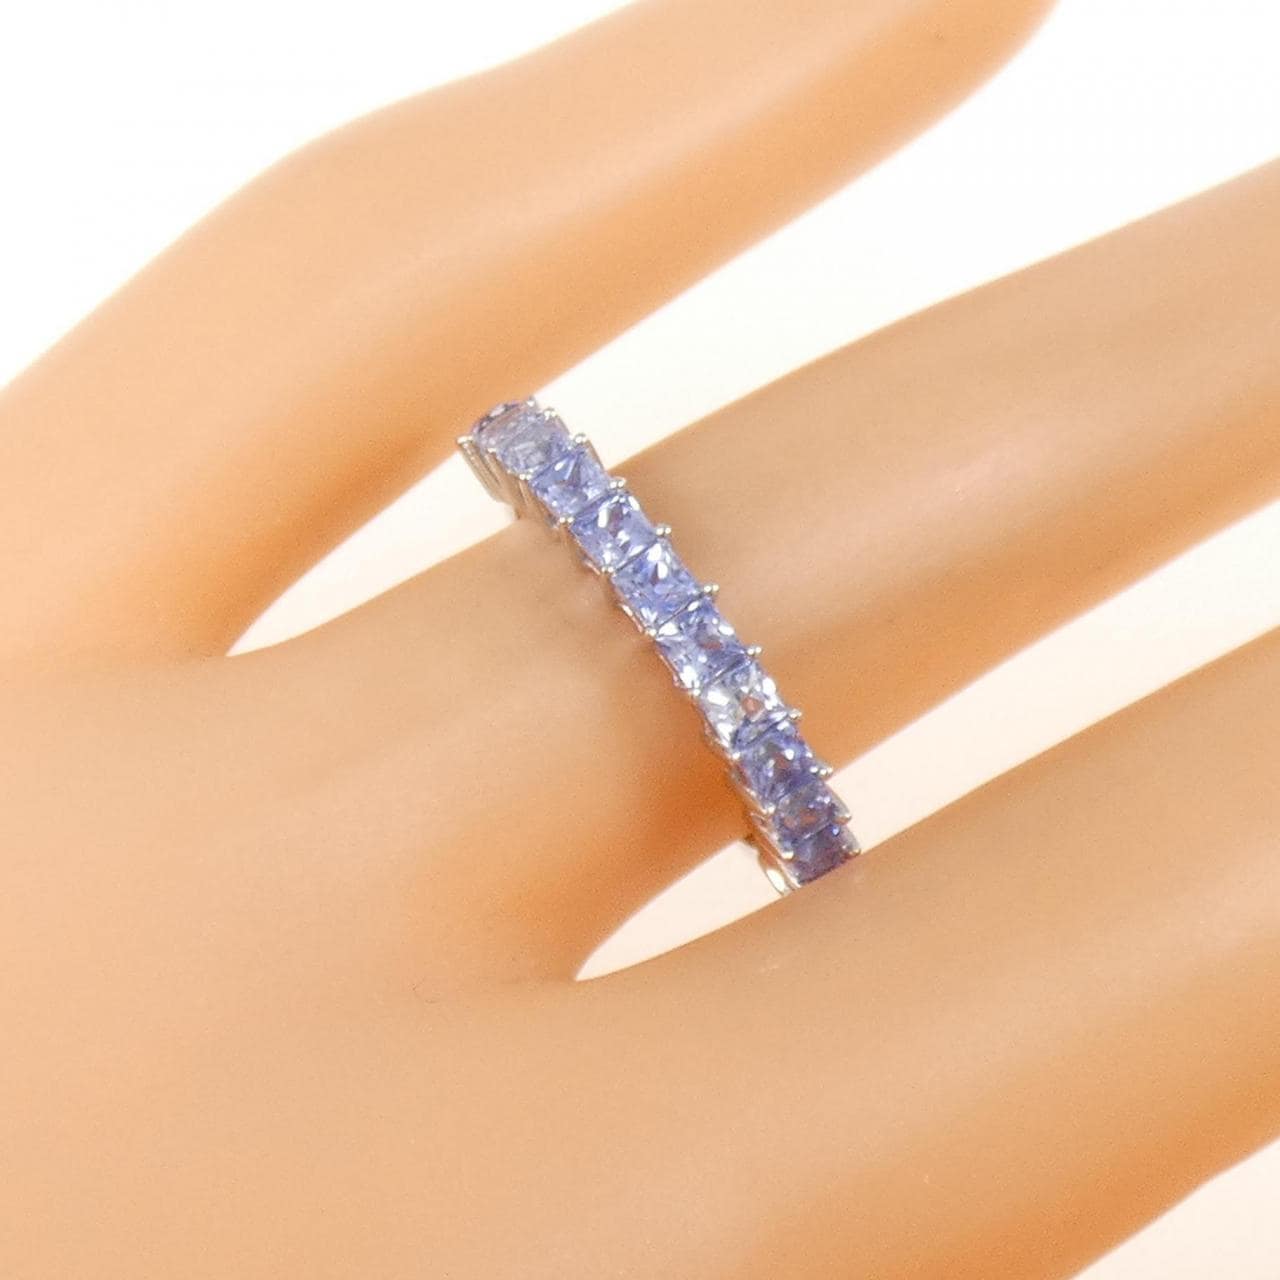 K18WG Sapphire Ring 1.12CT